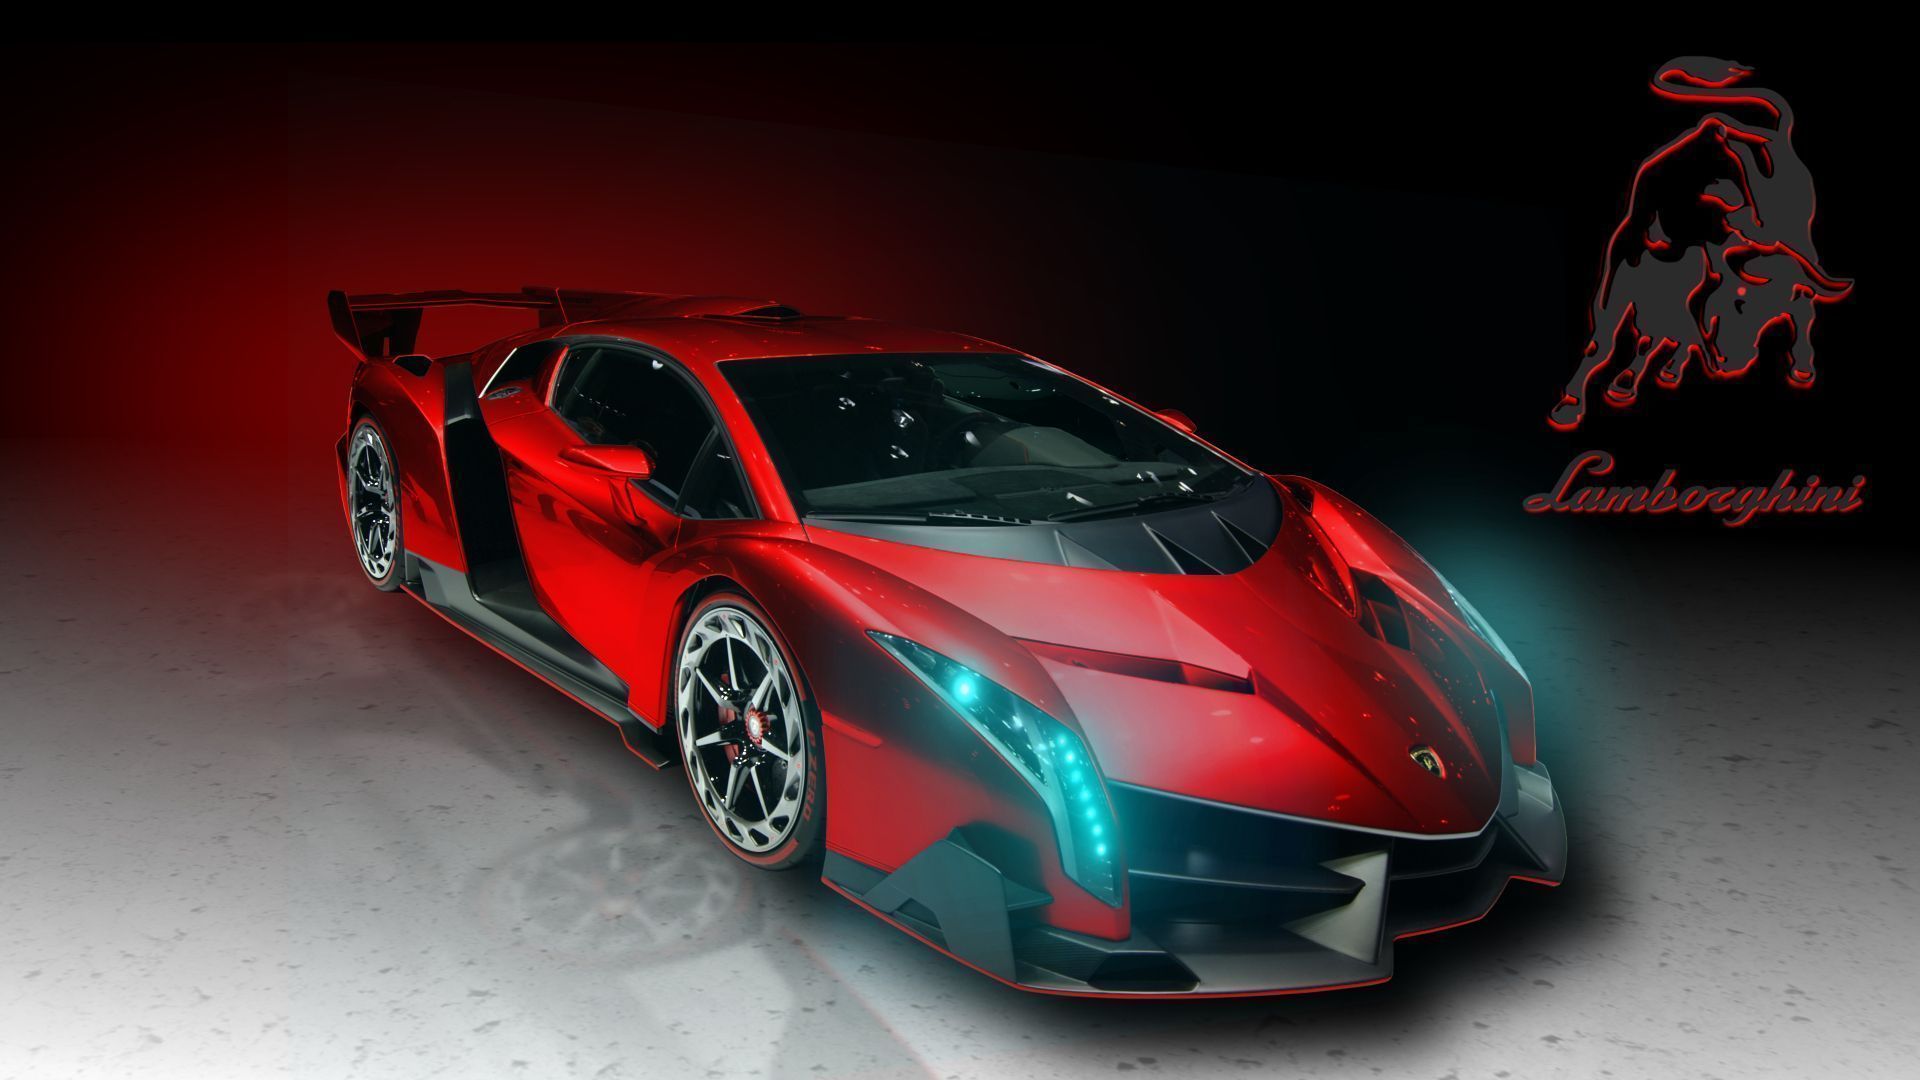 Lamborghini Veneno Wallpapers HD Download